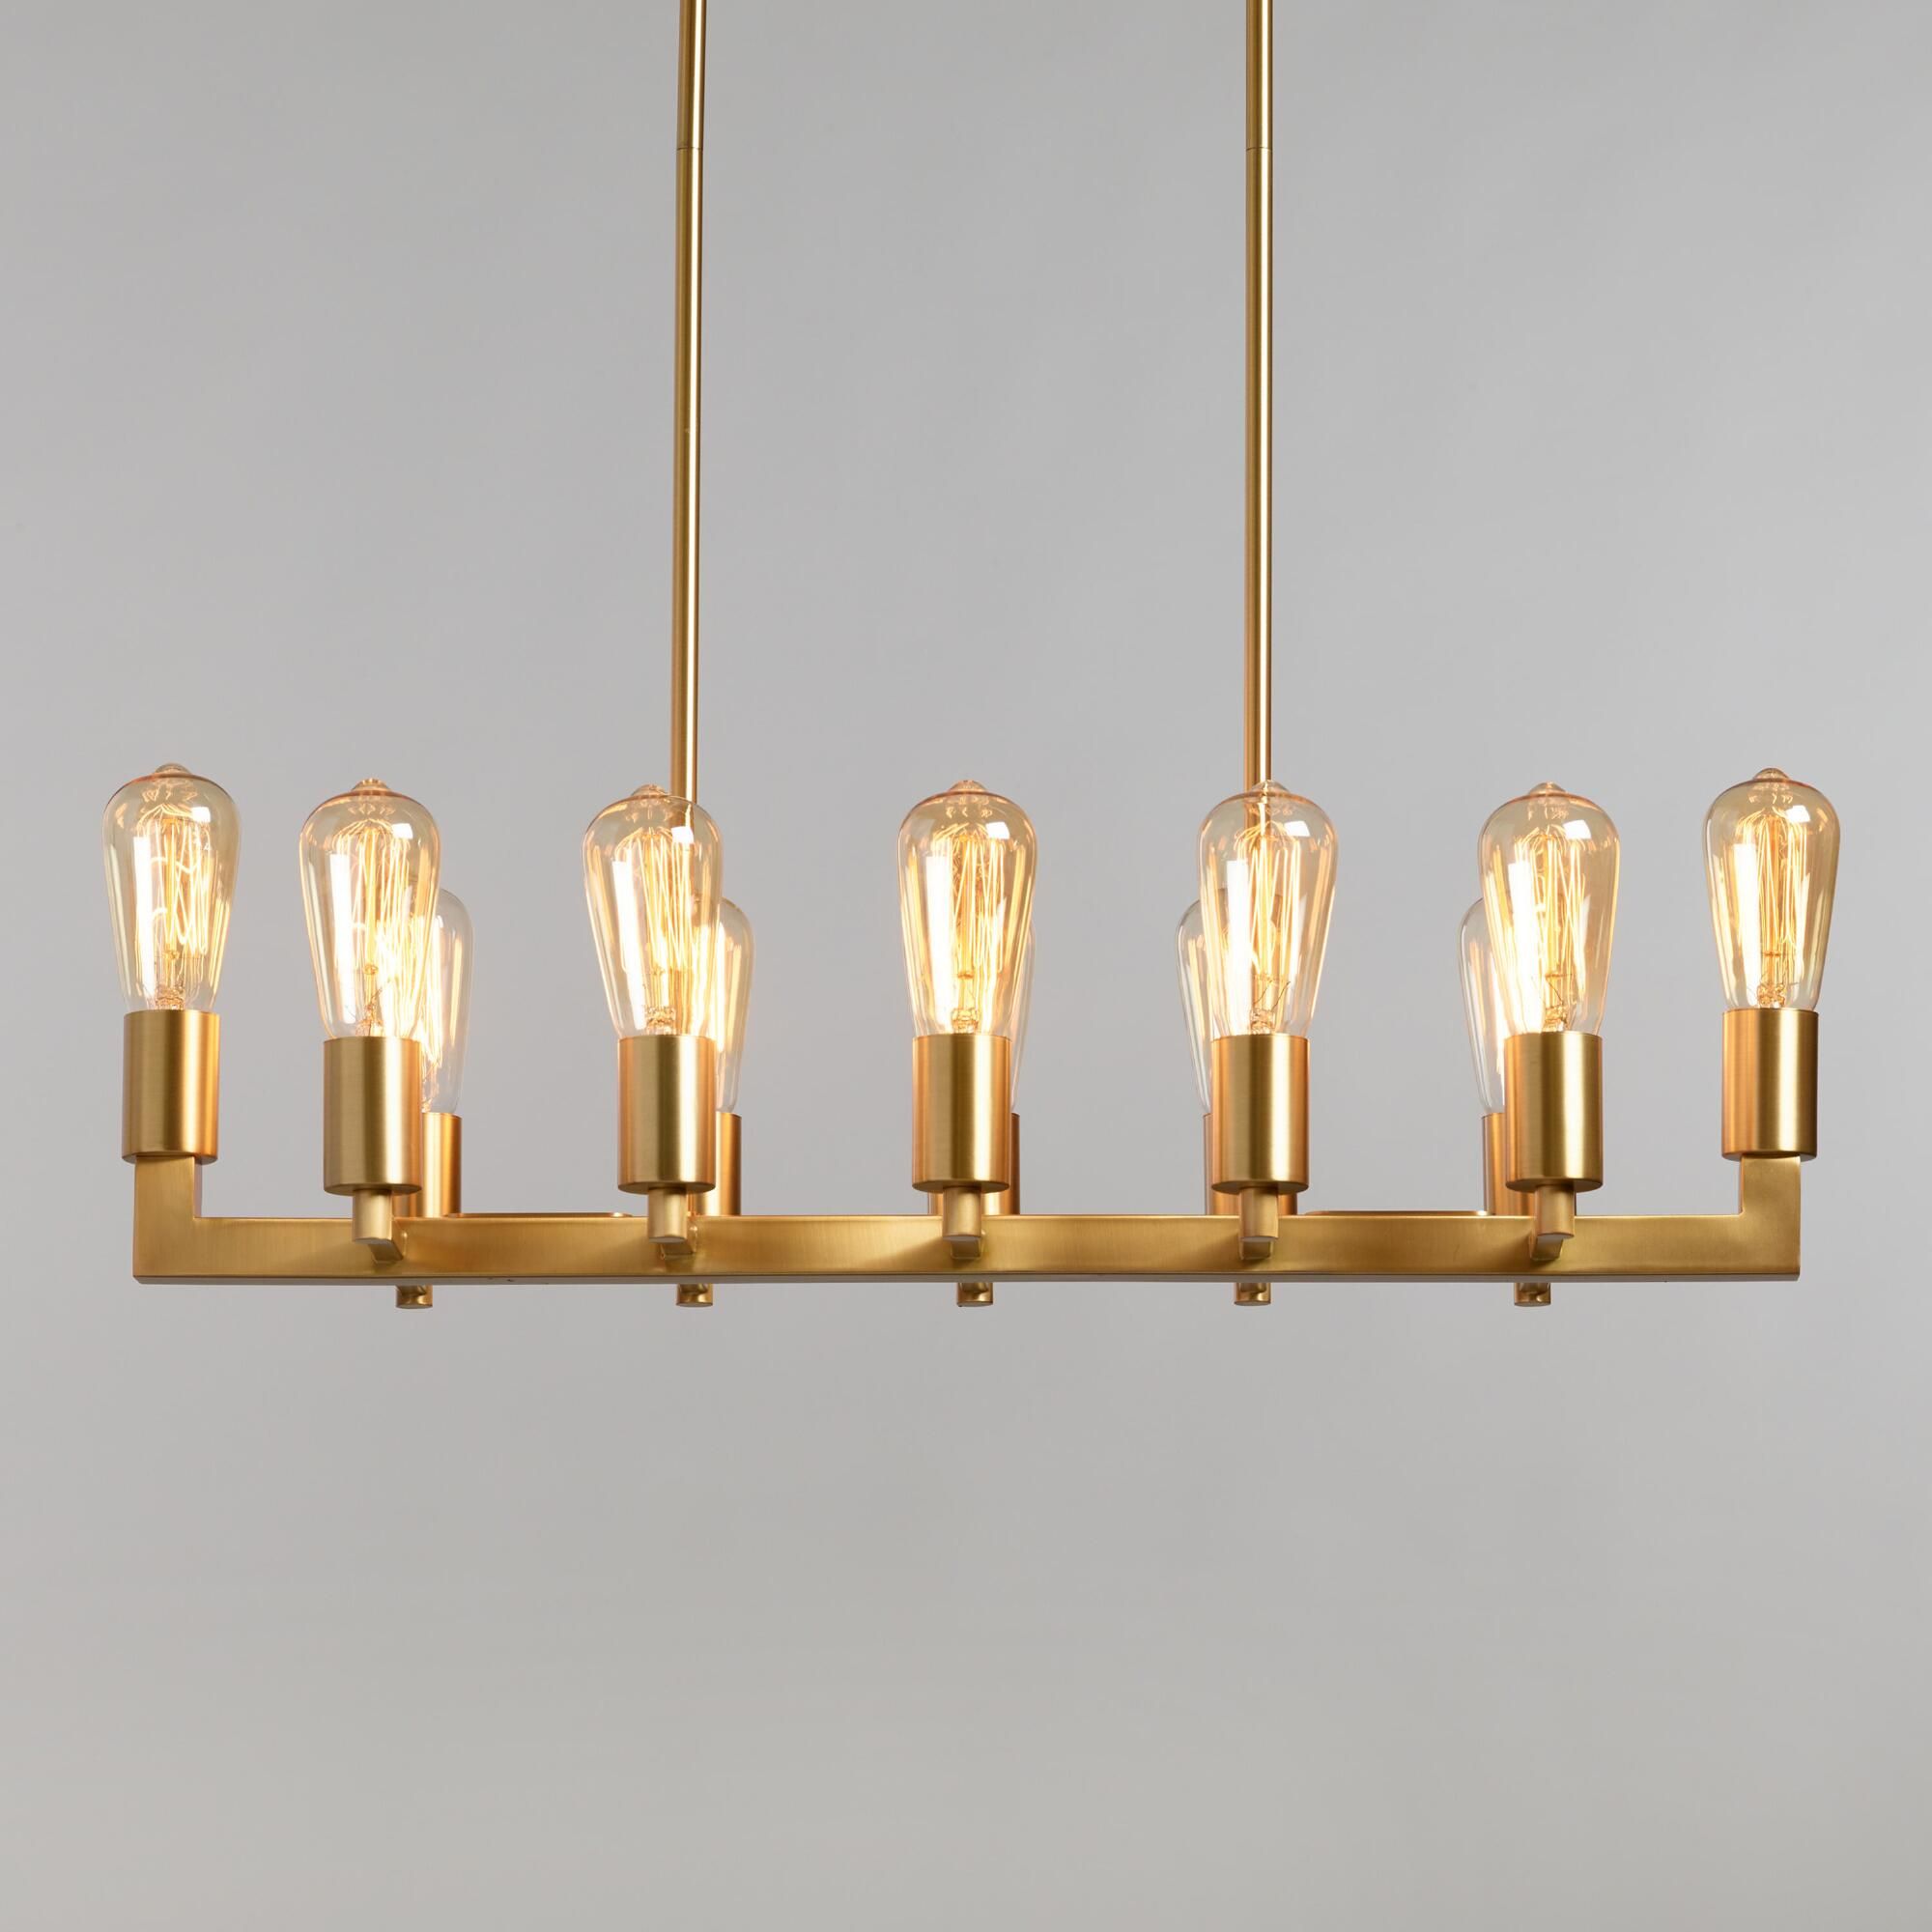 Gold Linear 12 Light Adjustable Height Reya Chandelier by World Market | World Market